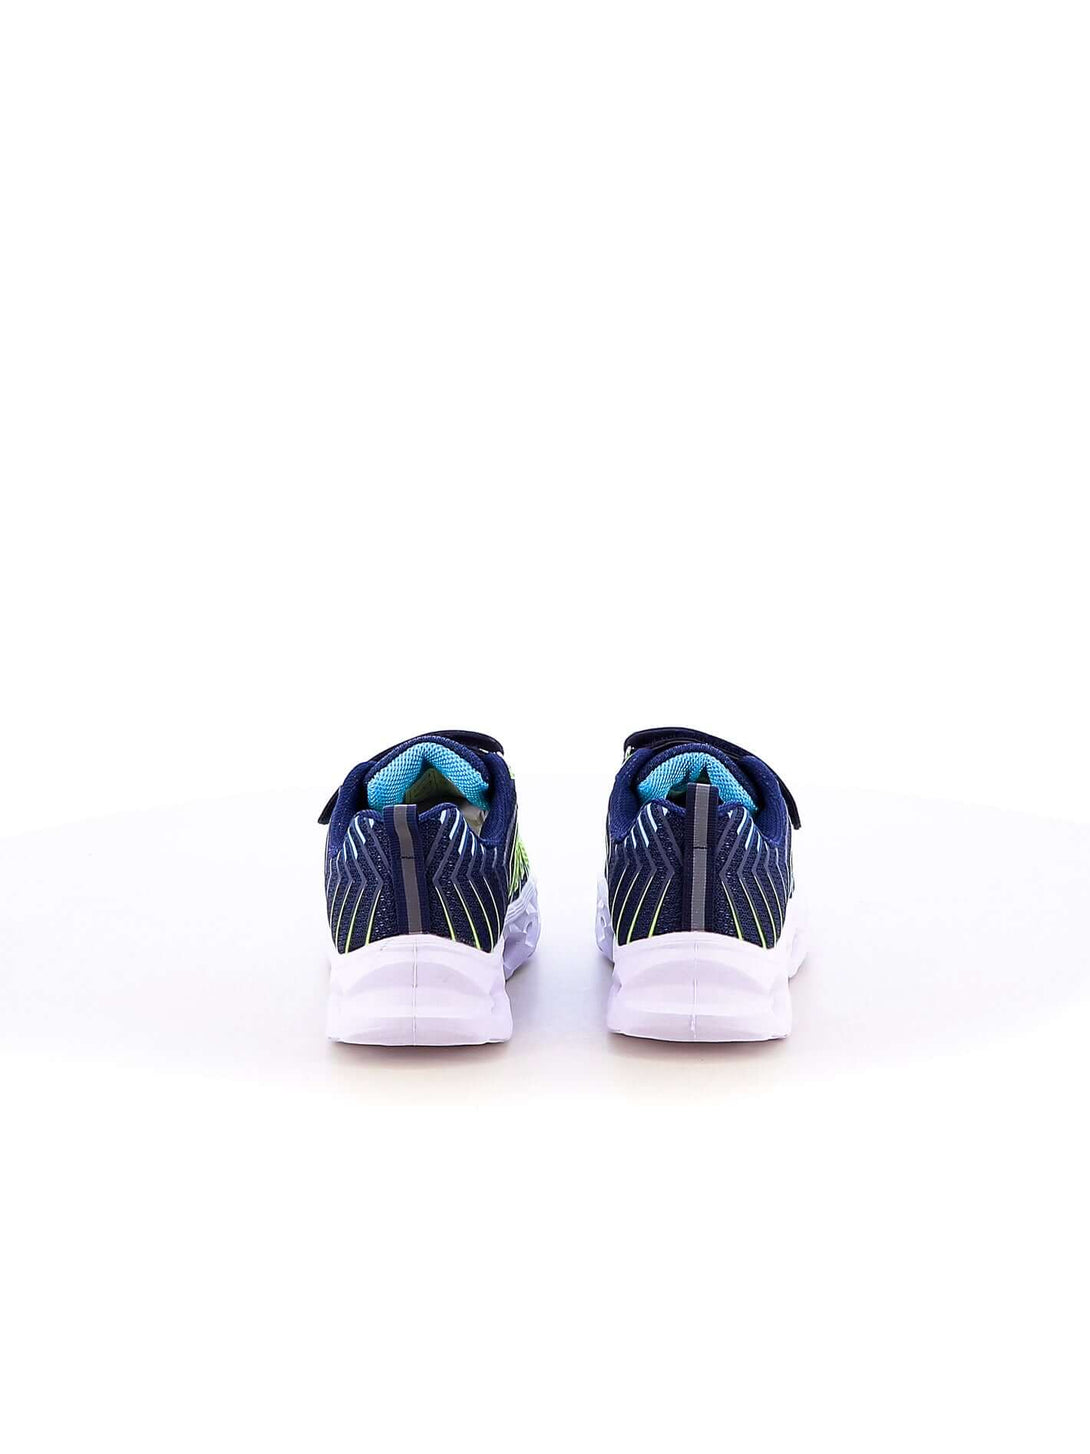 Sneakers con luci bambino MELANIA M2454 verde pastelli lime | Costa Superstore